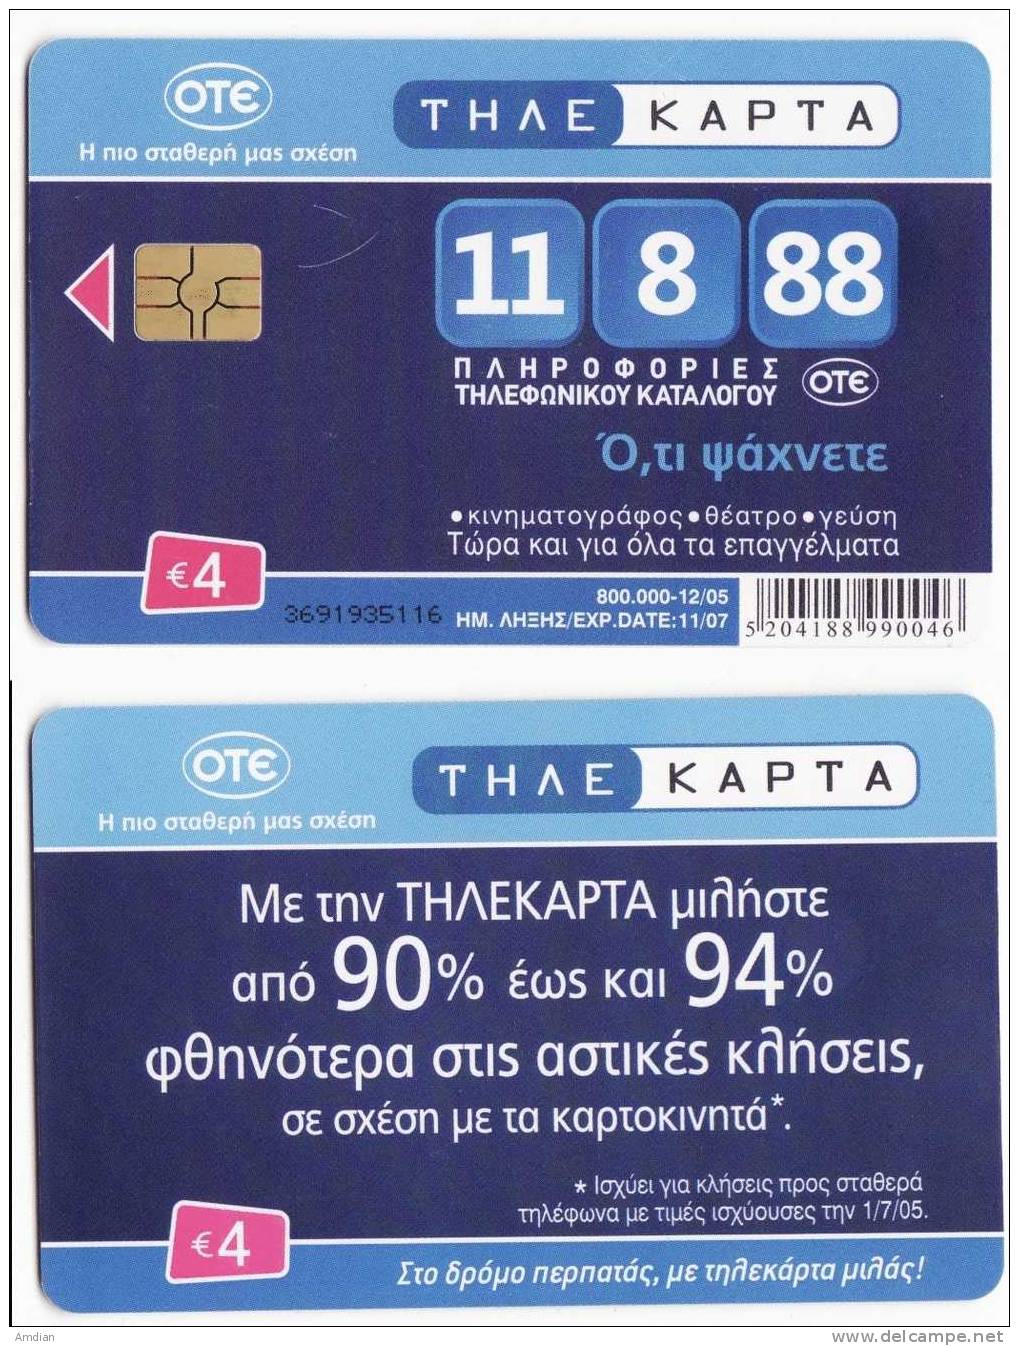 GREECE/GRECE - OTE - Telecoms Company Promotion - 12/2005 - Tirage 800000 - Phonecard / Telecarte - Greece